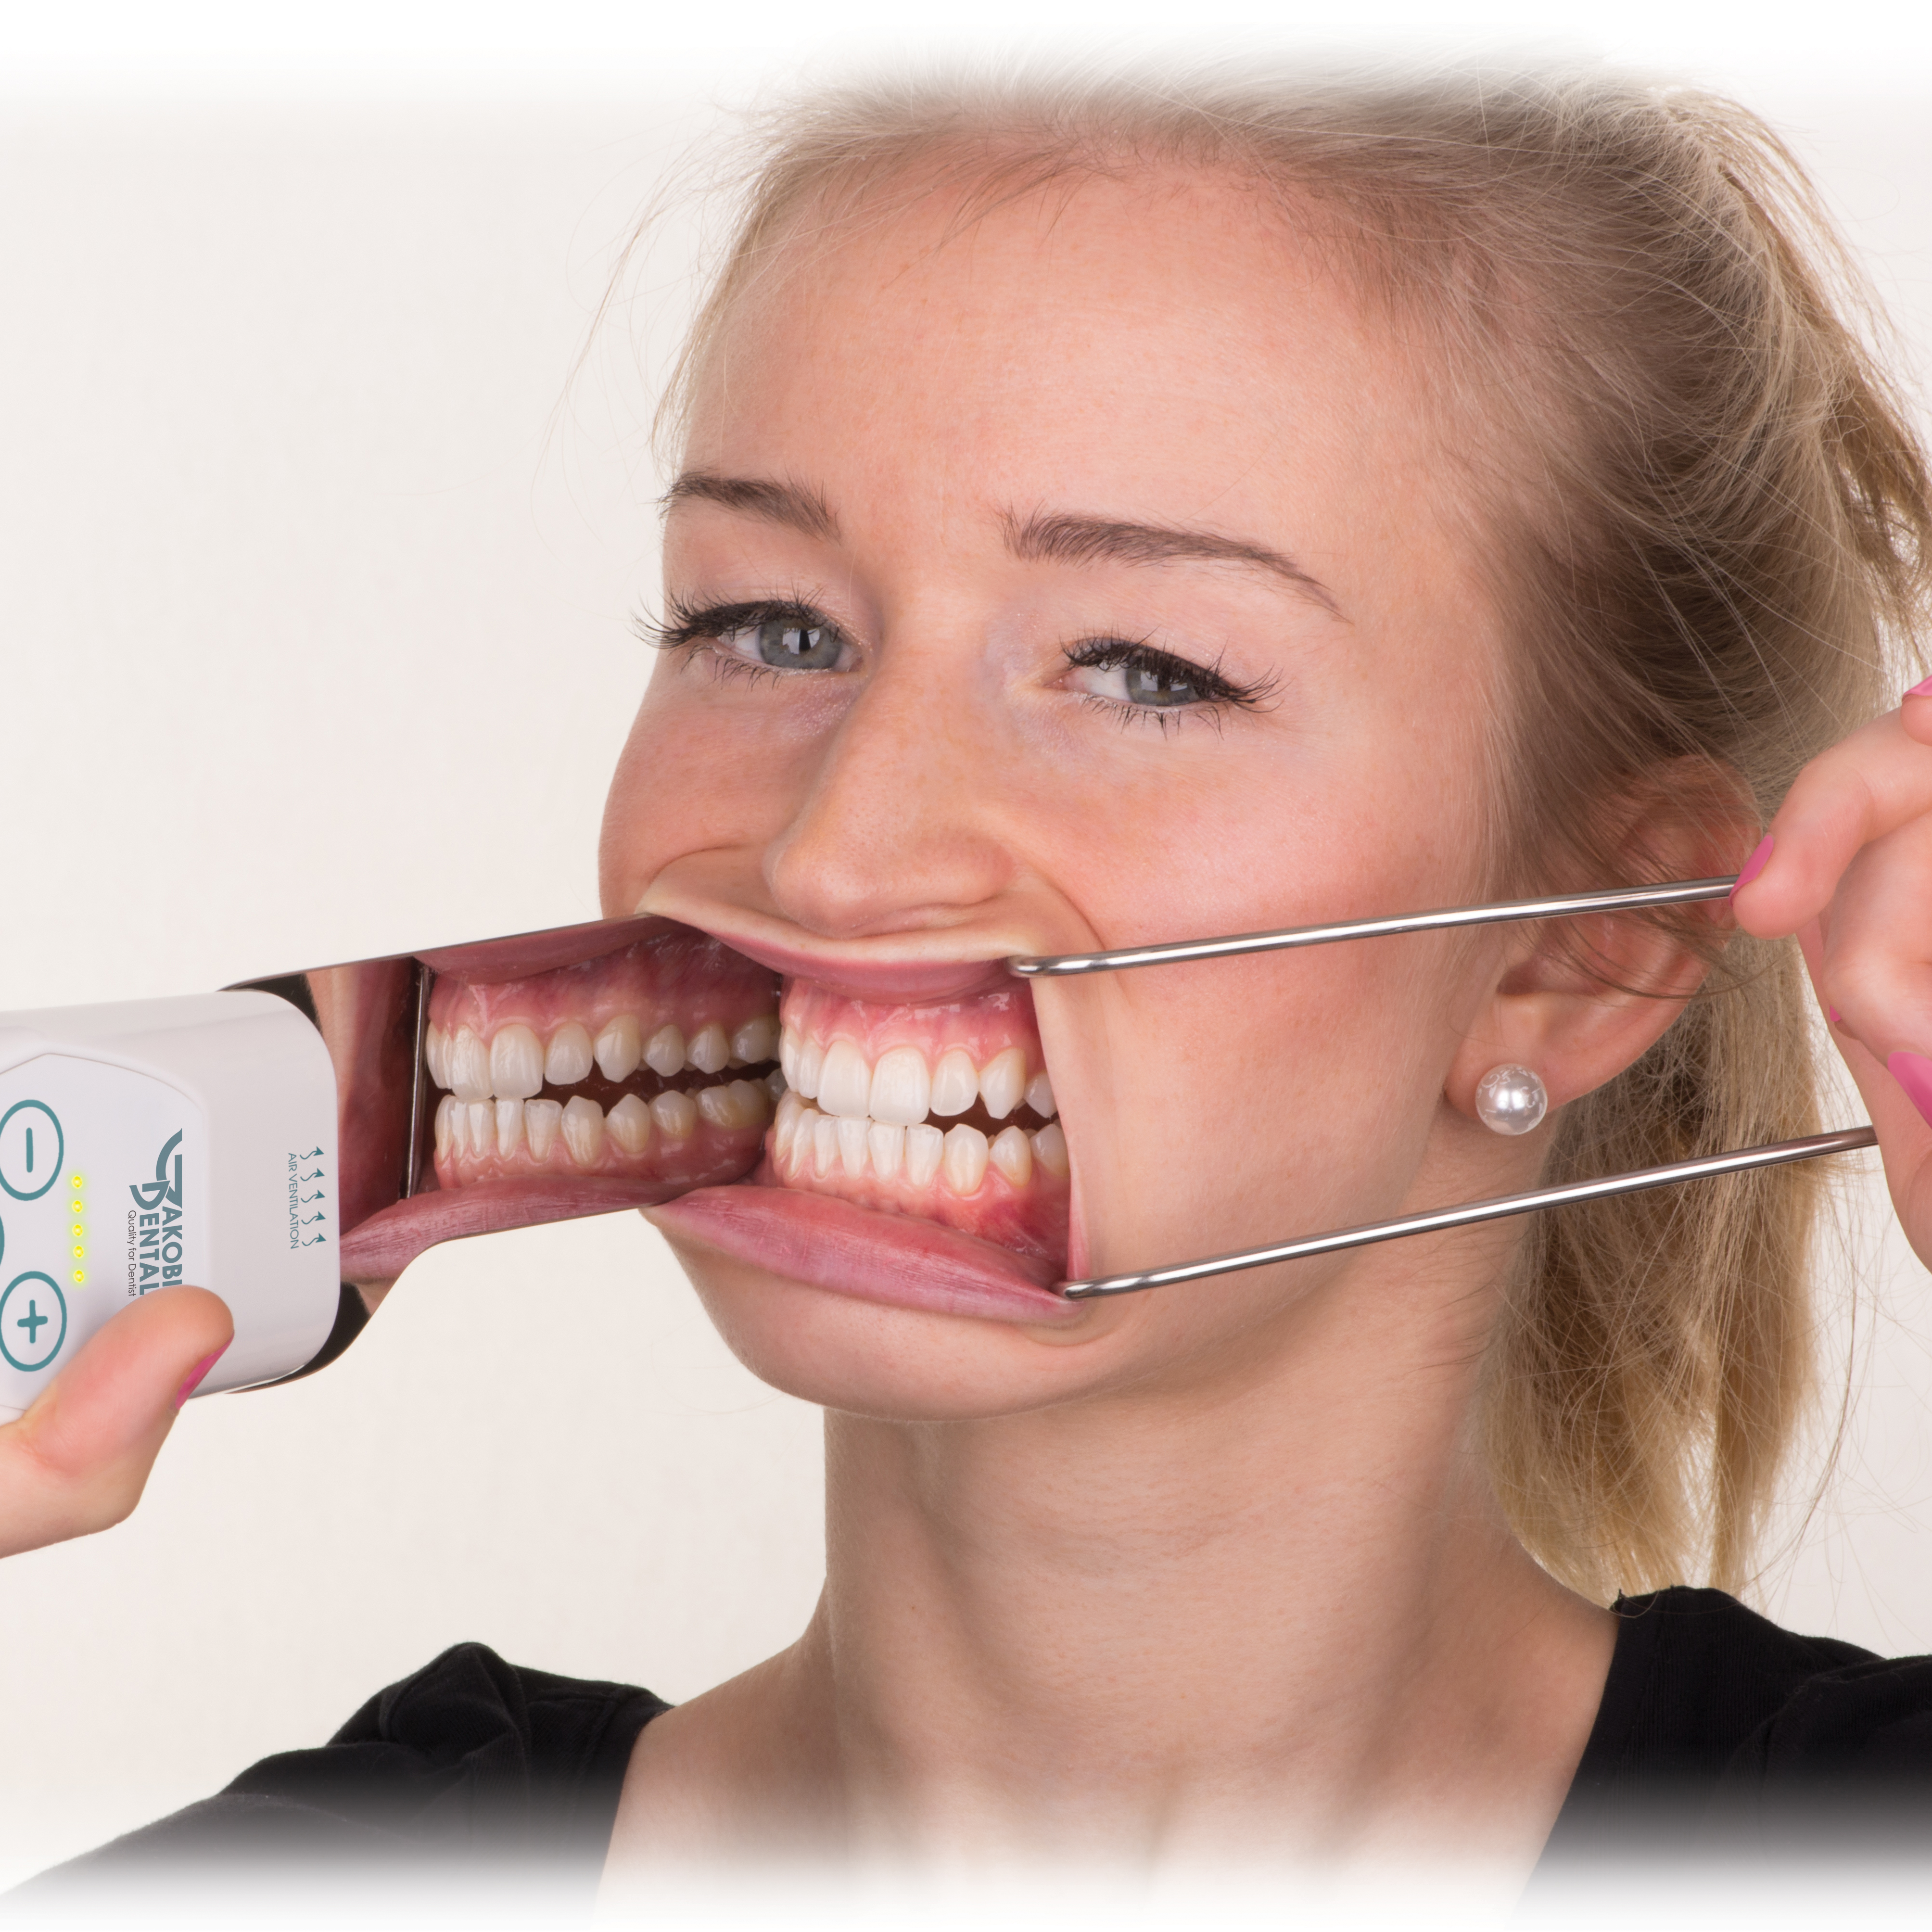 Fotospiegel Dental  Kit VARIO inkl. 3 Spiegel nach Wahl